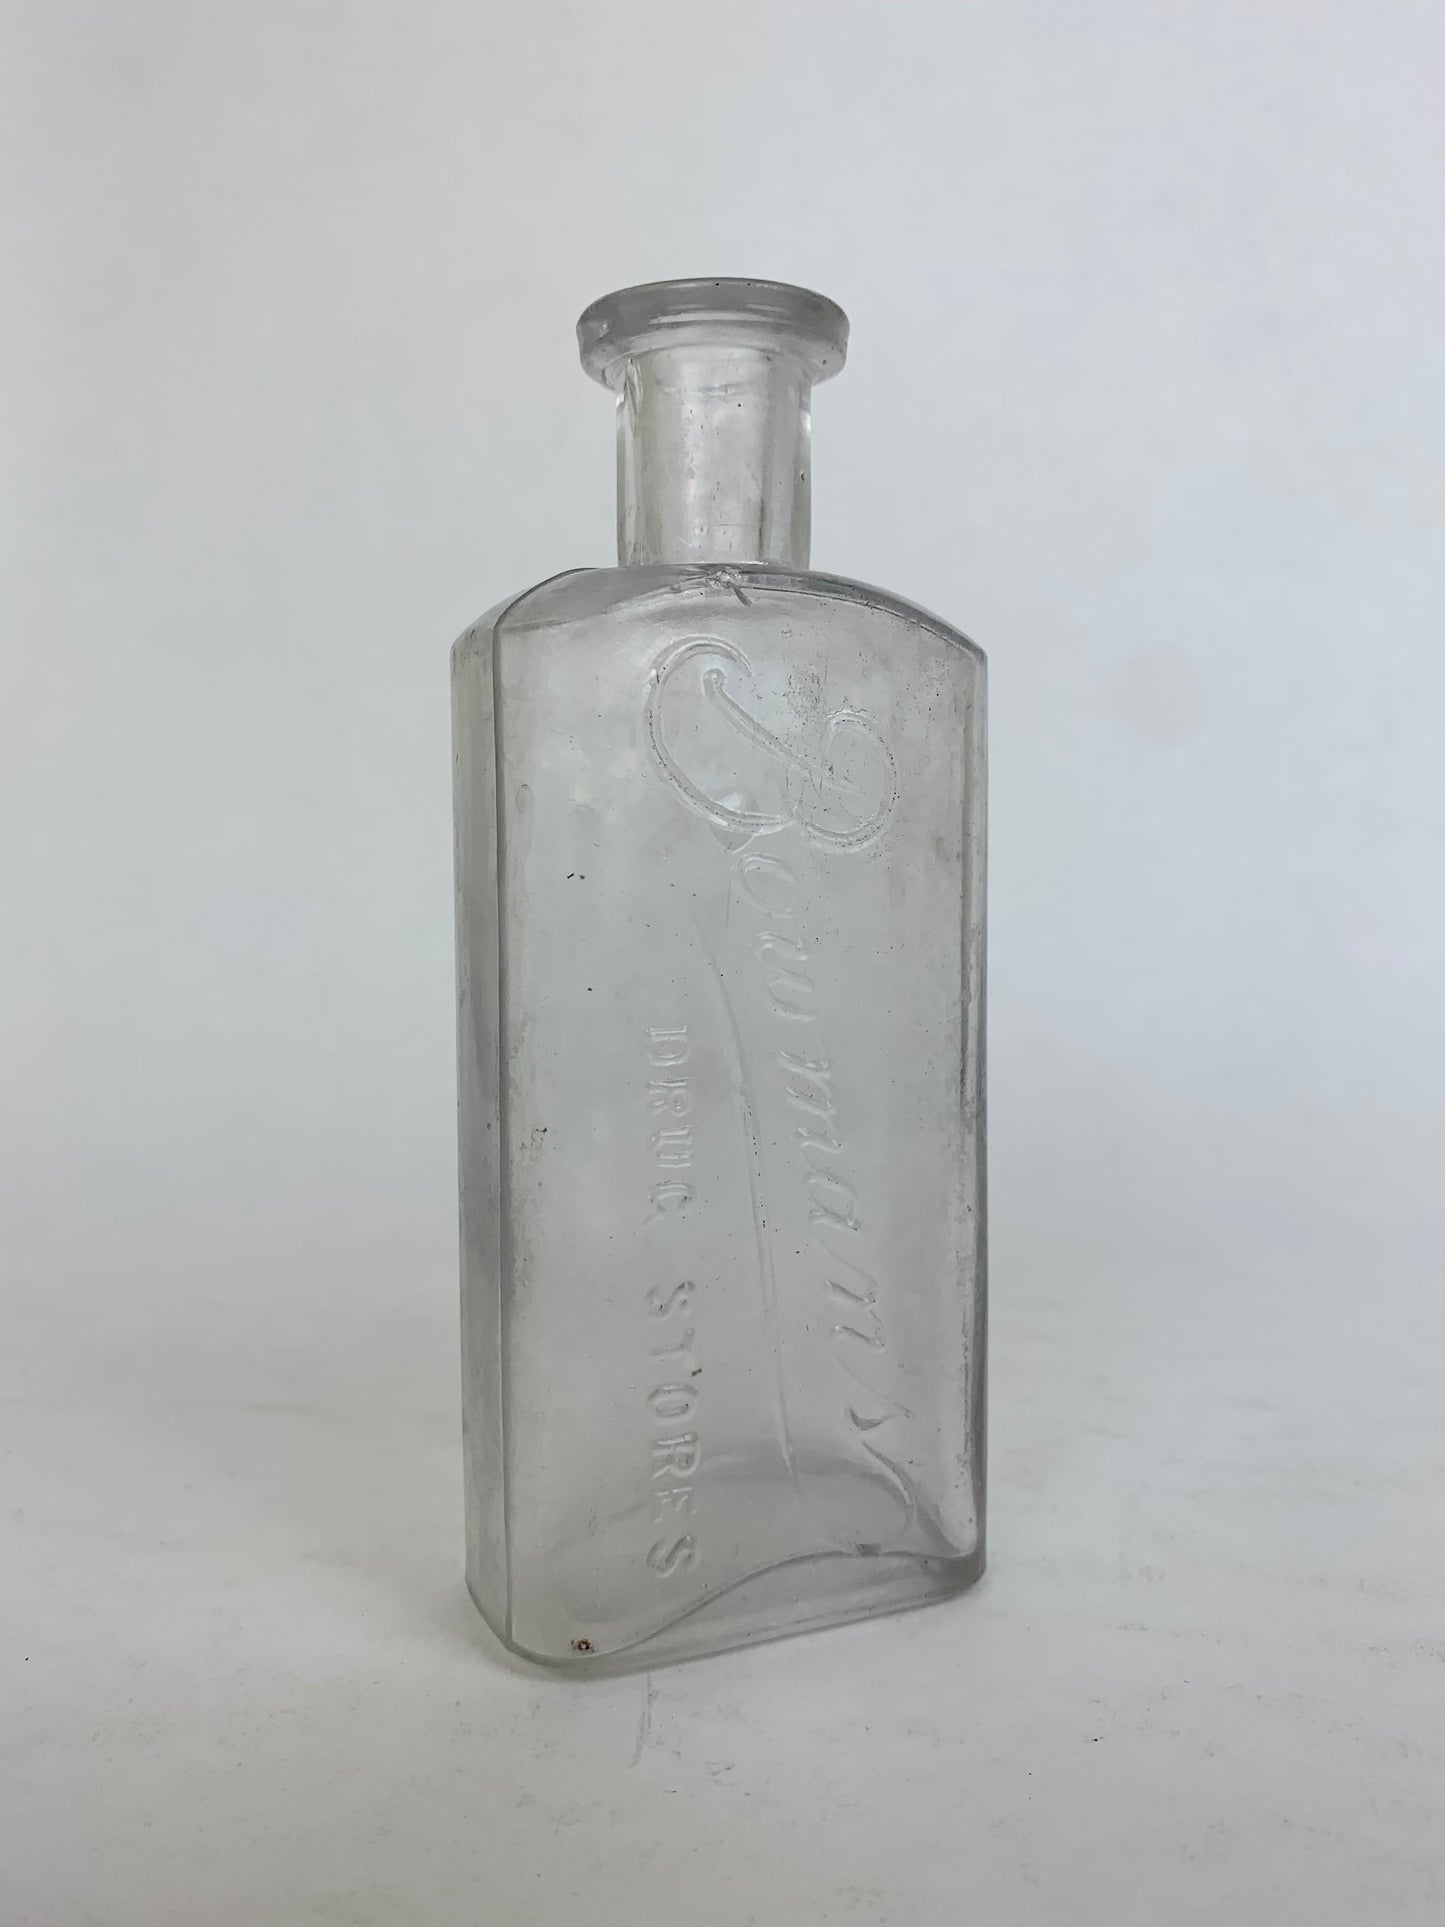 Antique Medicine Bottle - Bowman's Drug Stores